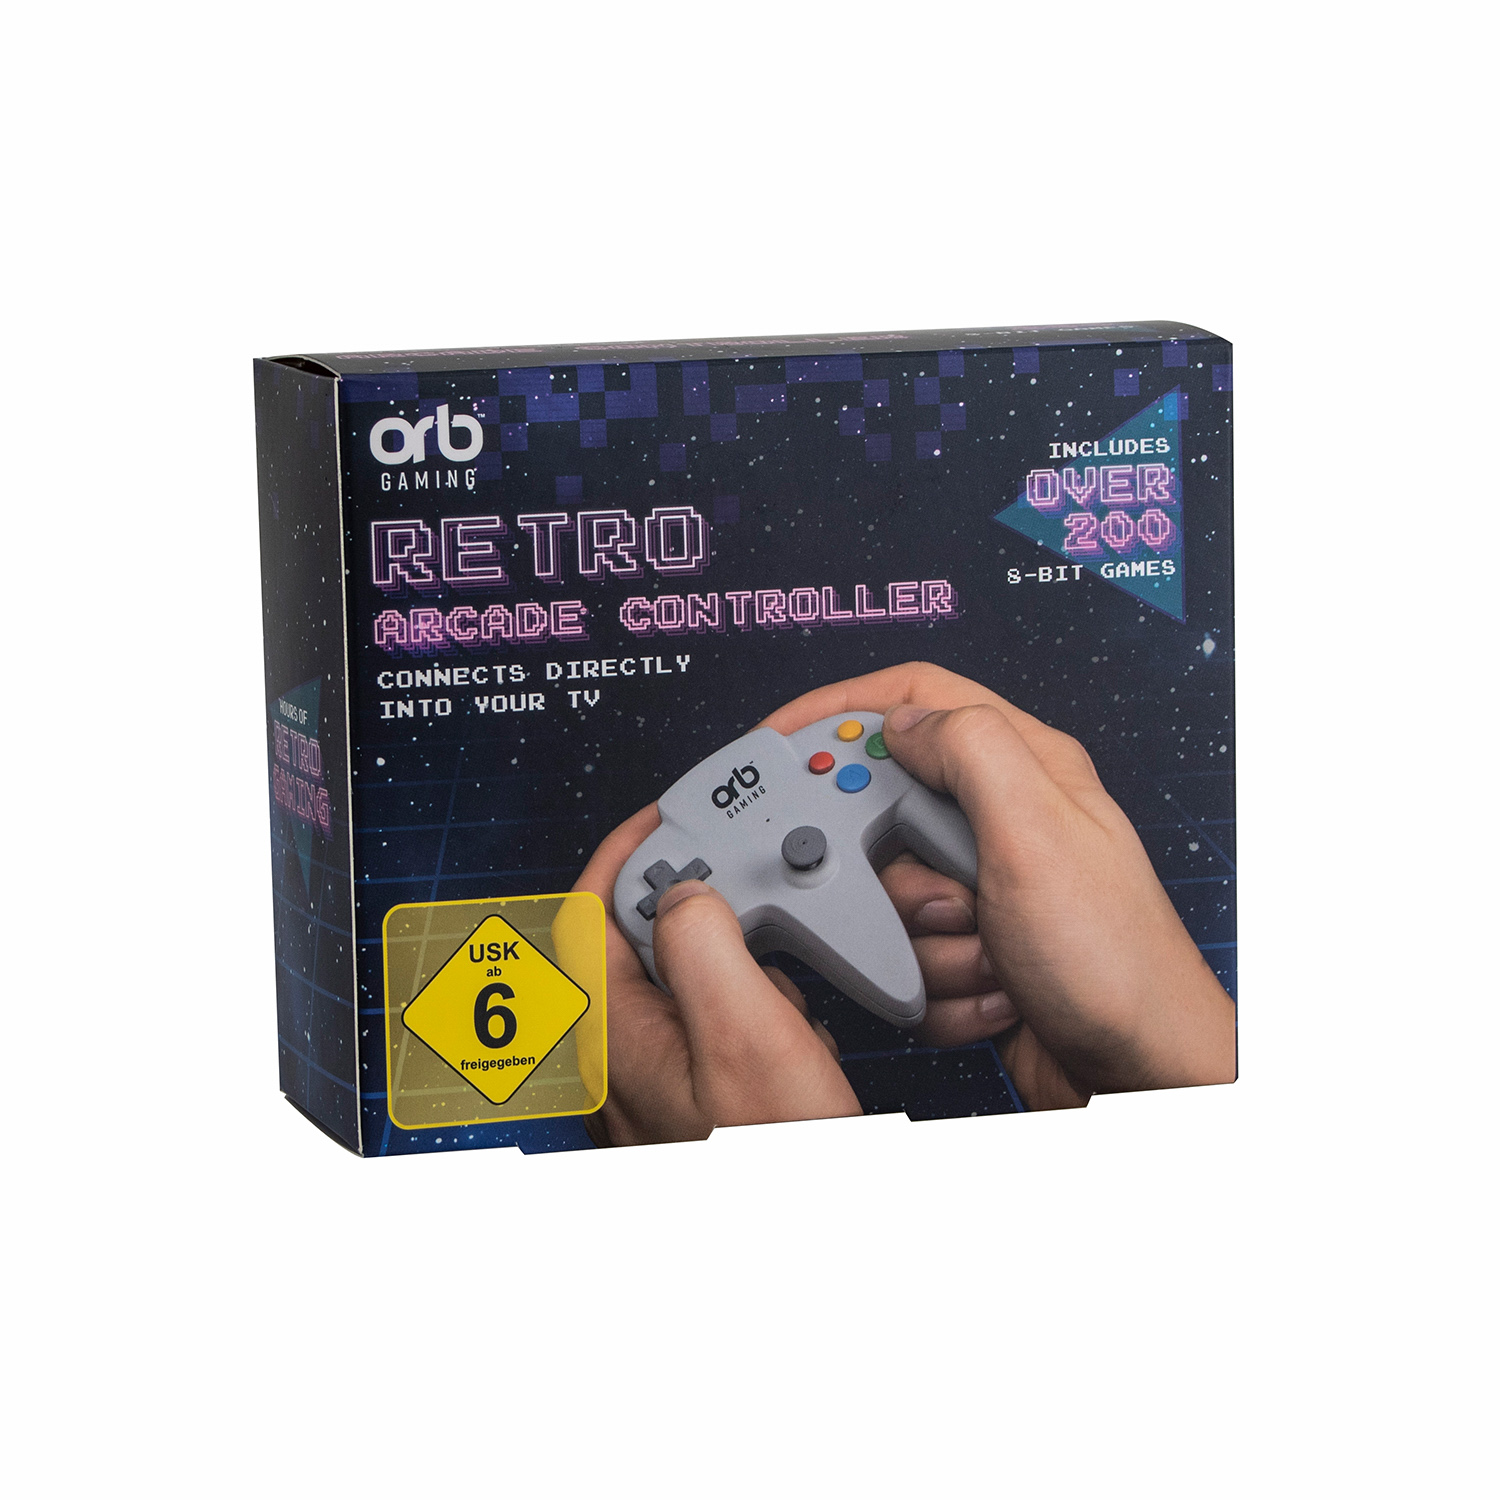 -inkl. grau Controller ORB 200x Spielen 8-bit TV Games Arcade Retro